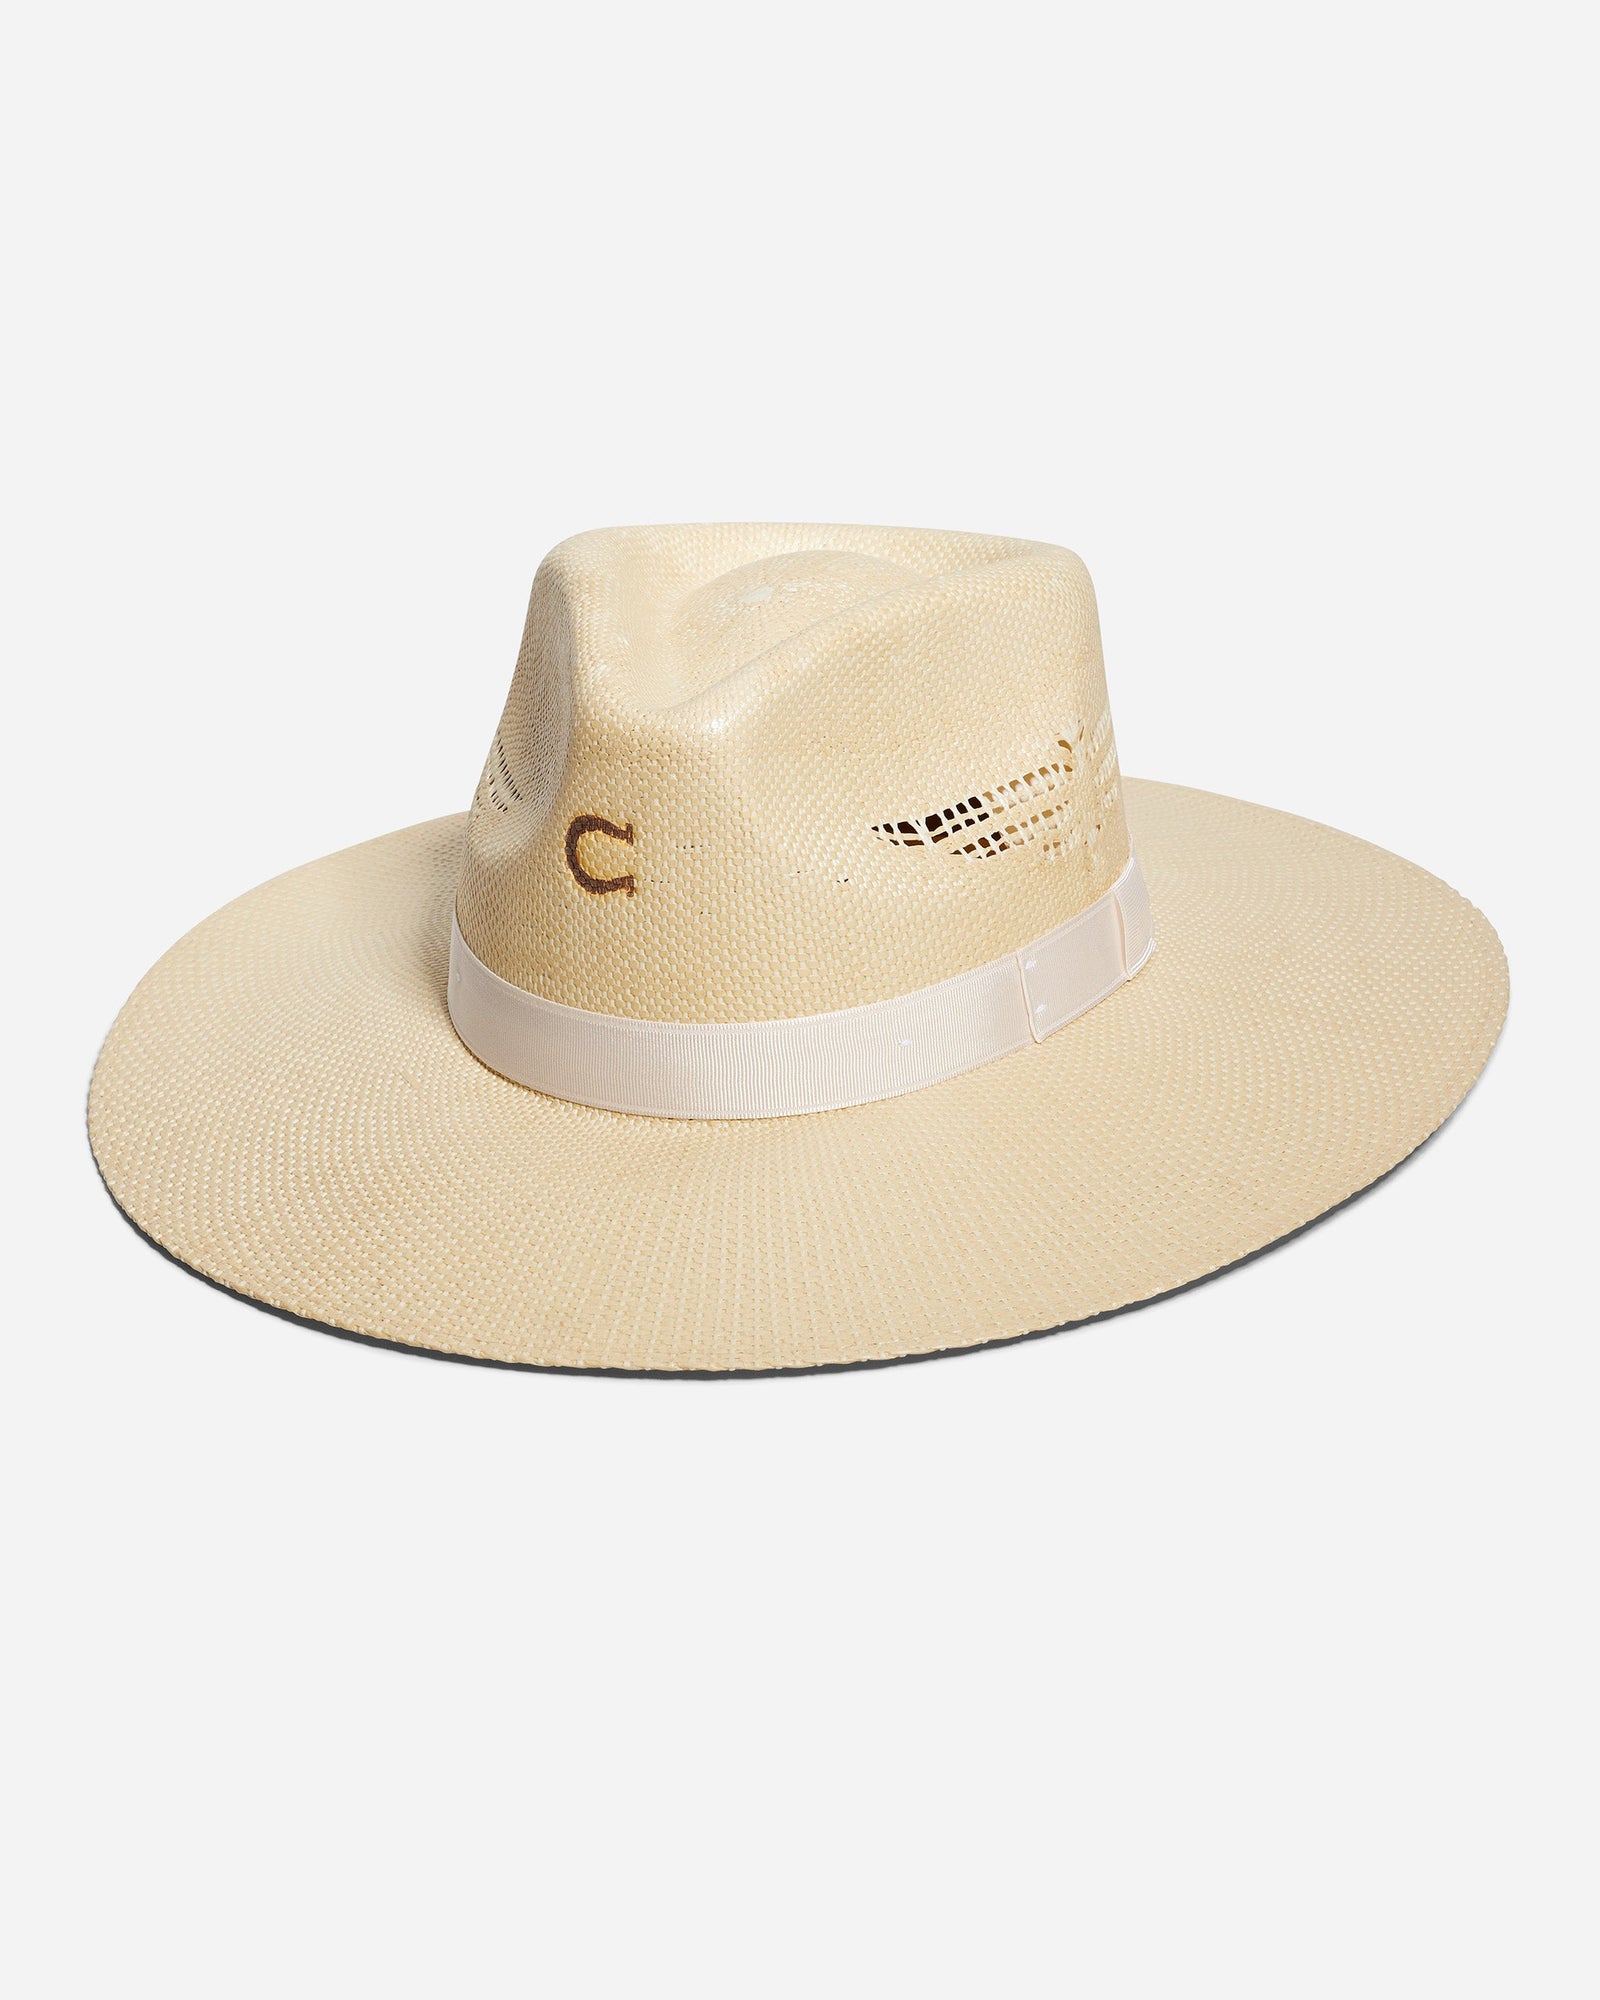 Mexico Shore Straw Hat